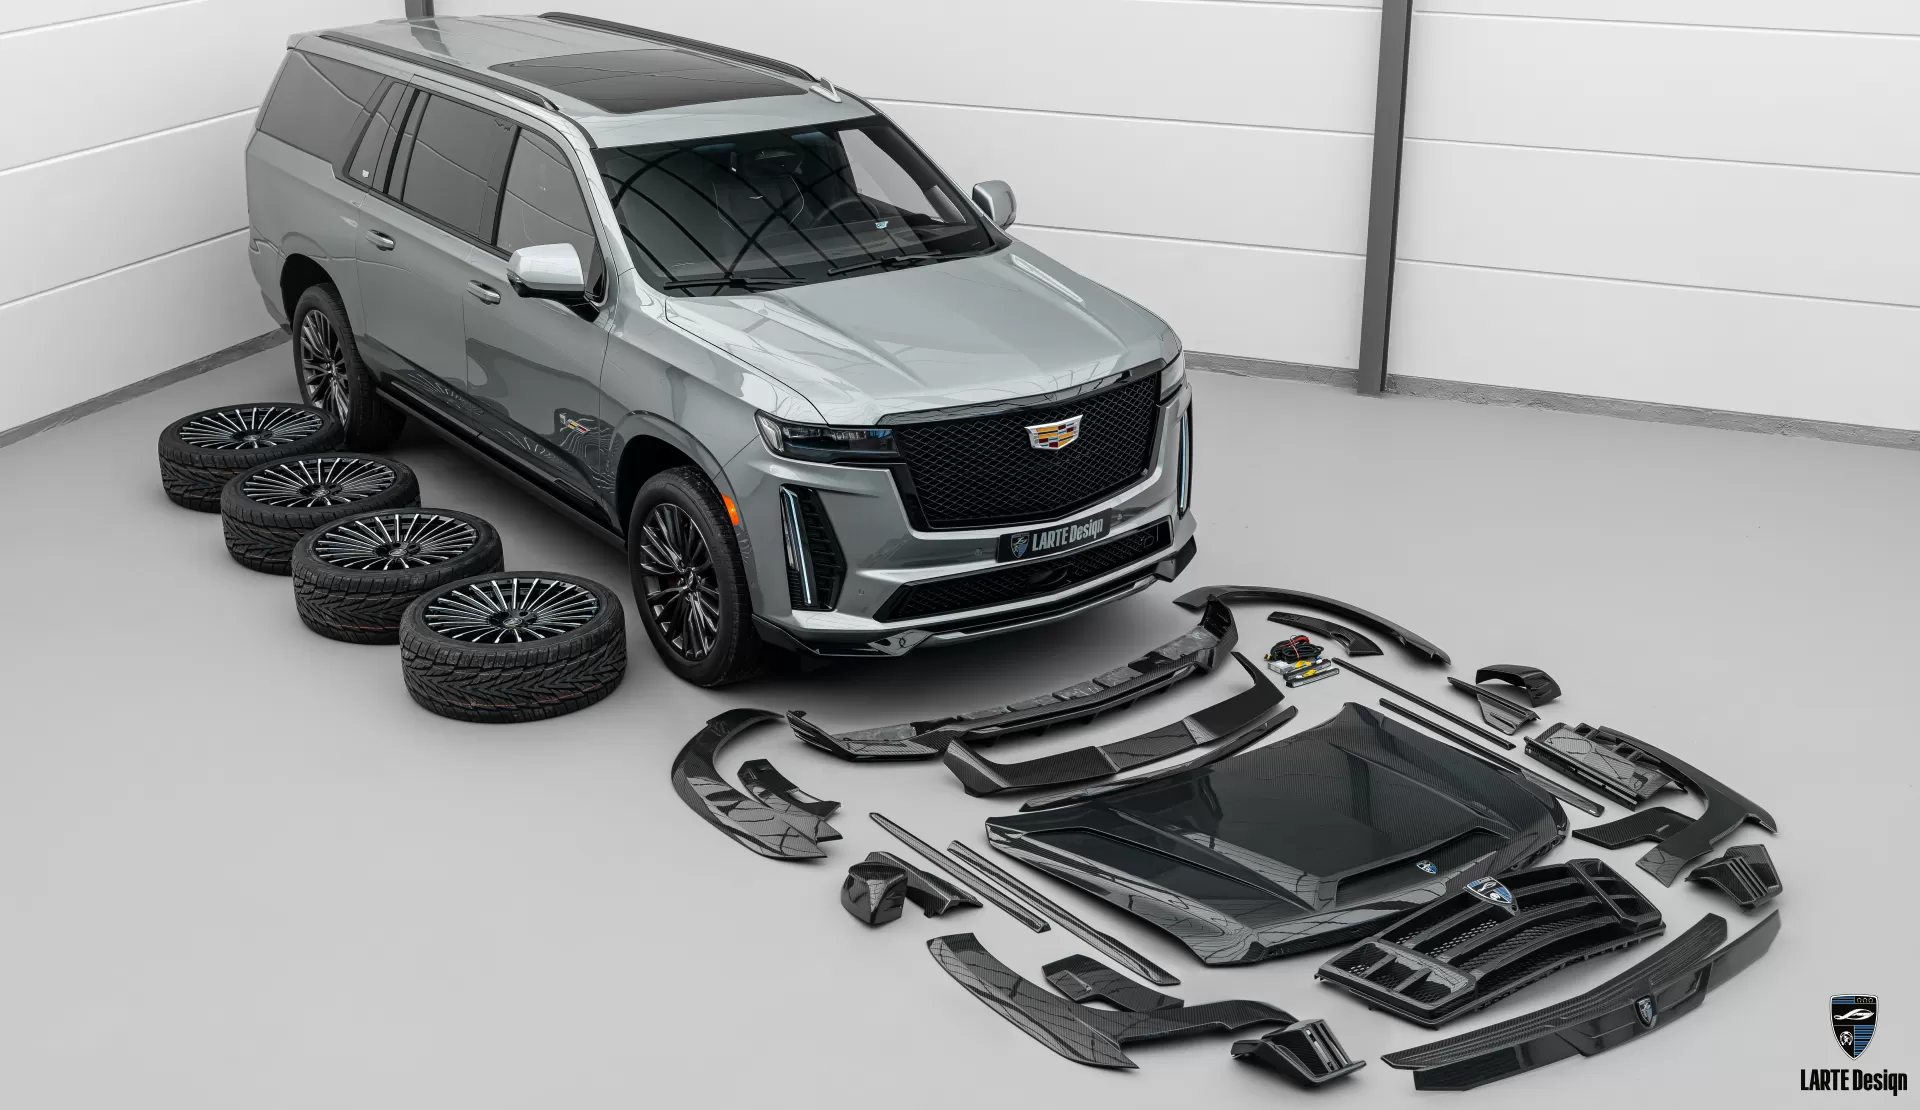 Carbon fiber body kit for Cadillac Escalade-V ESV in the LARTE Design studio